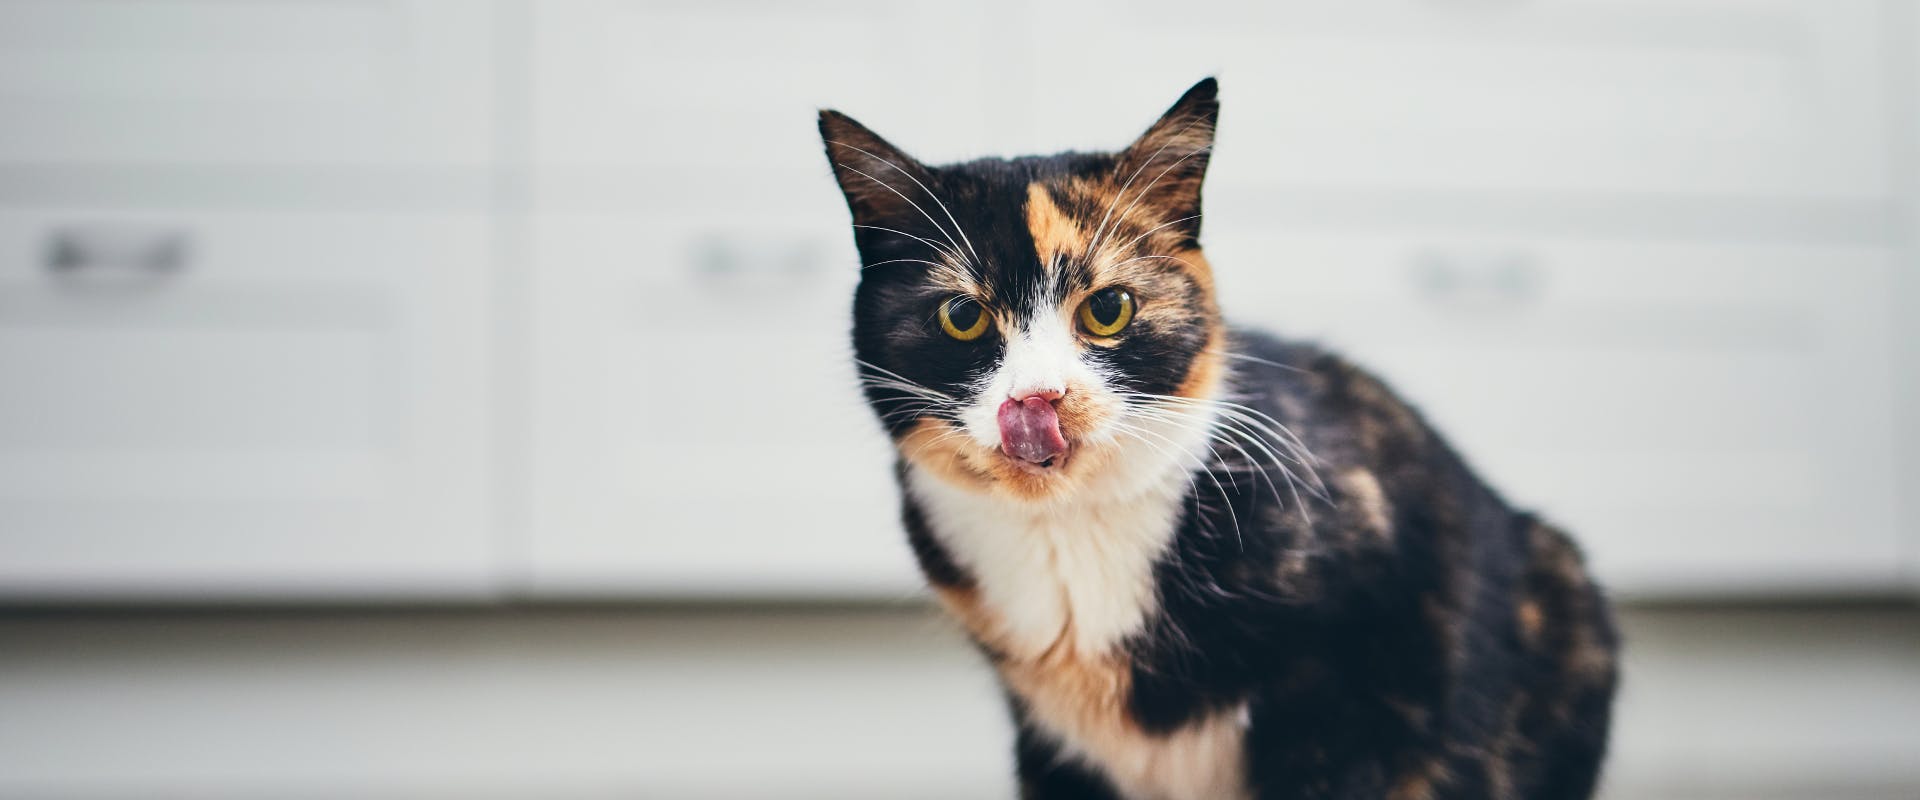 A cat enjoying some cat food.